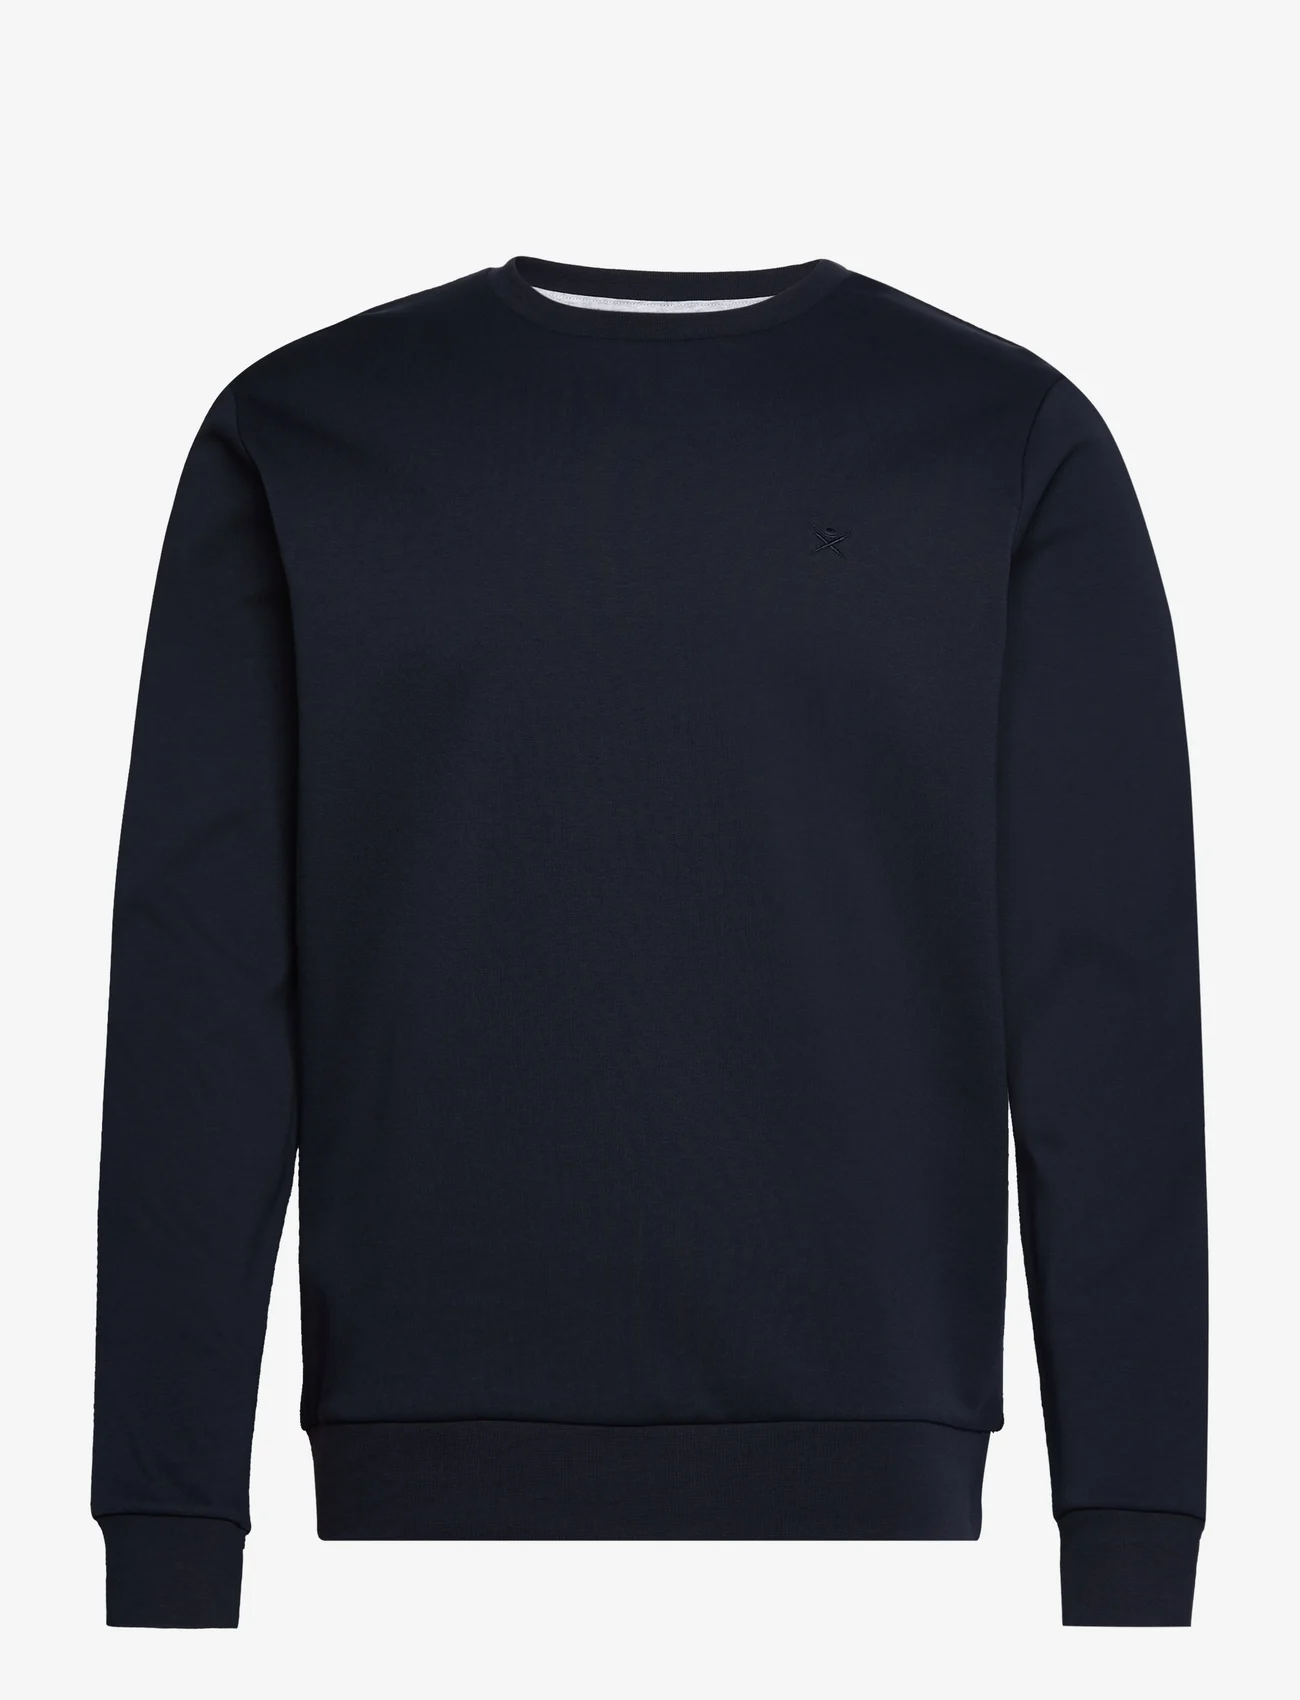 Hackett London - DOUBLE KNIT CREW - sweatshirts - navy blue - 0